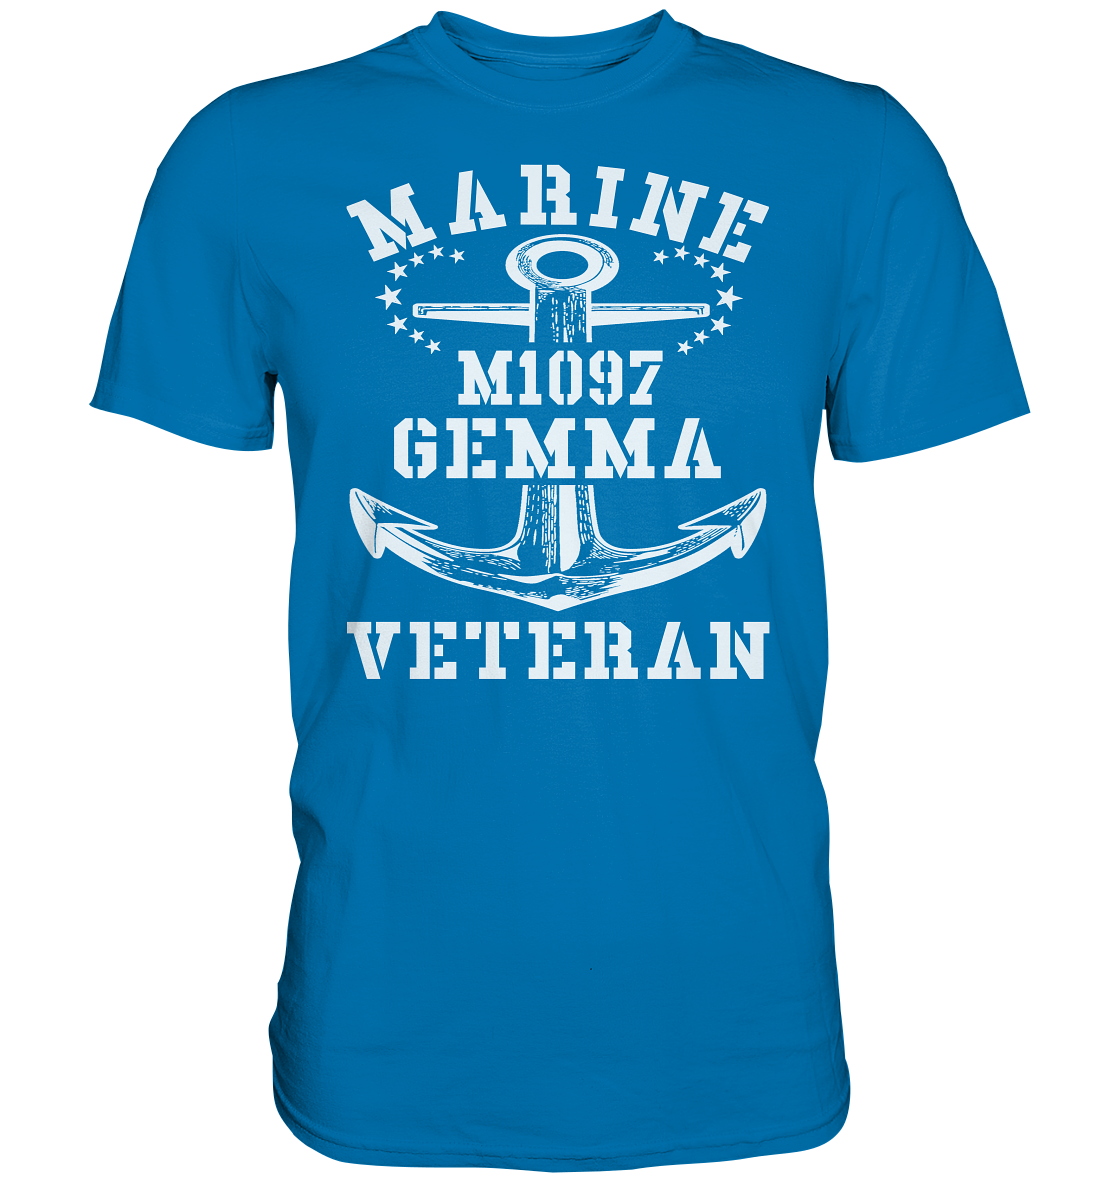 SM-Boot M1097 GEMMA Marine Veteran - Premium Shirt